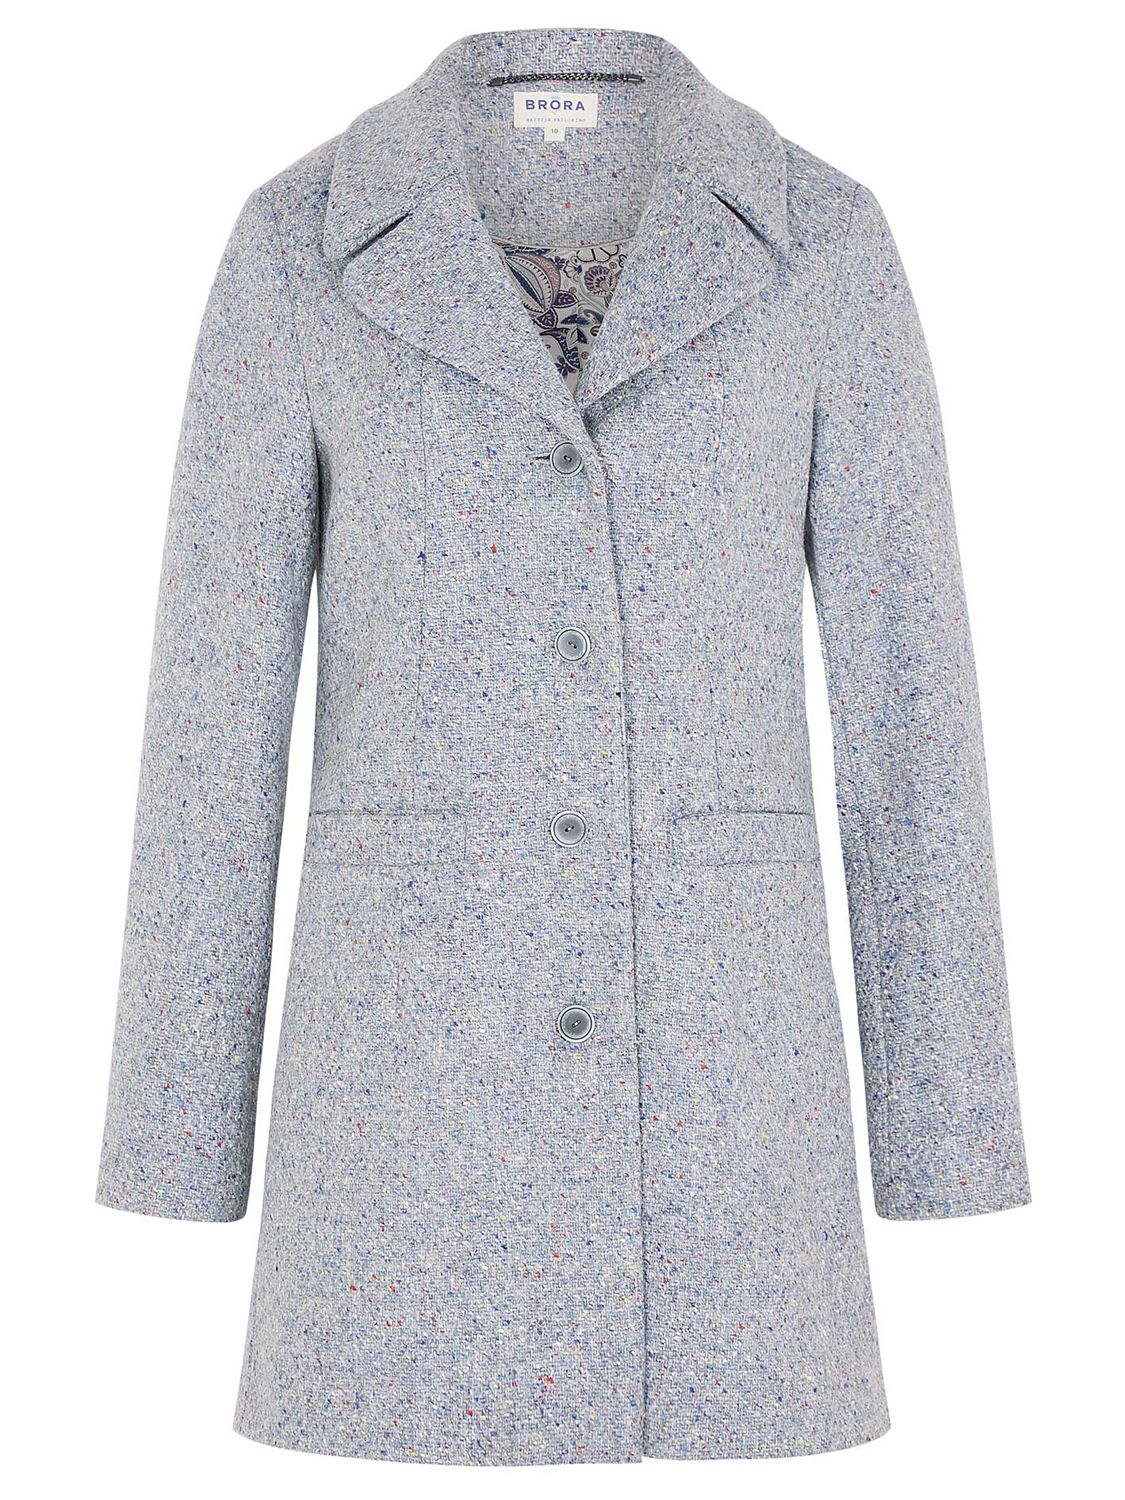 Brora Marl Tweed Coat, Nimbus